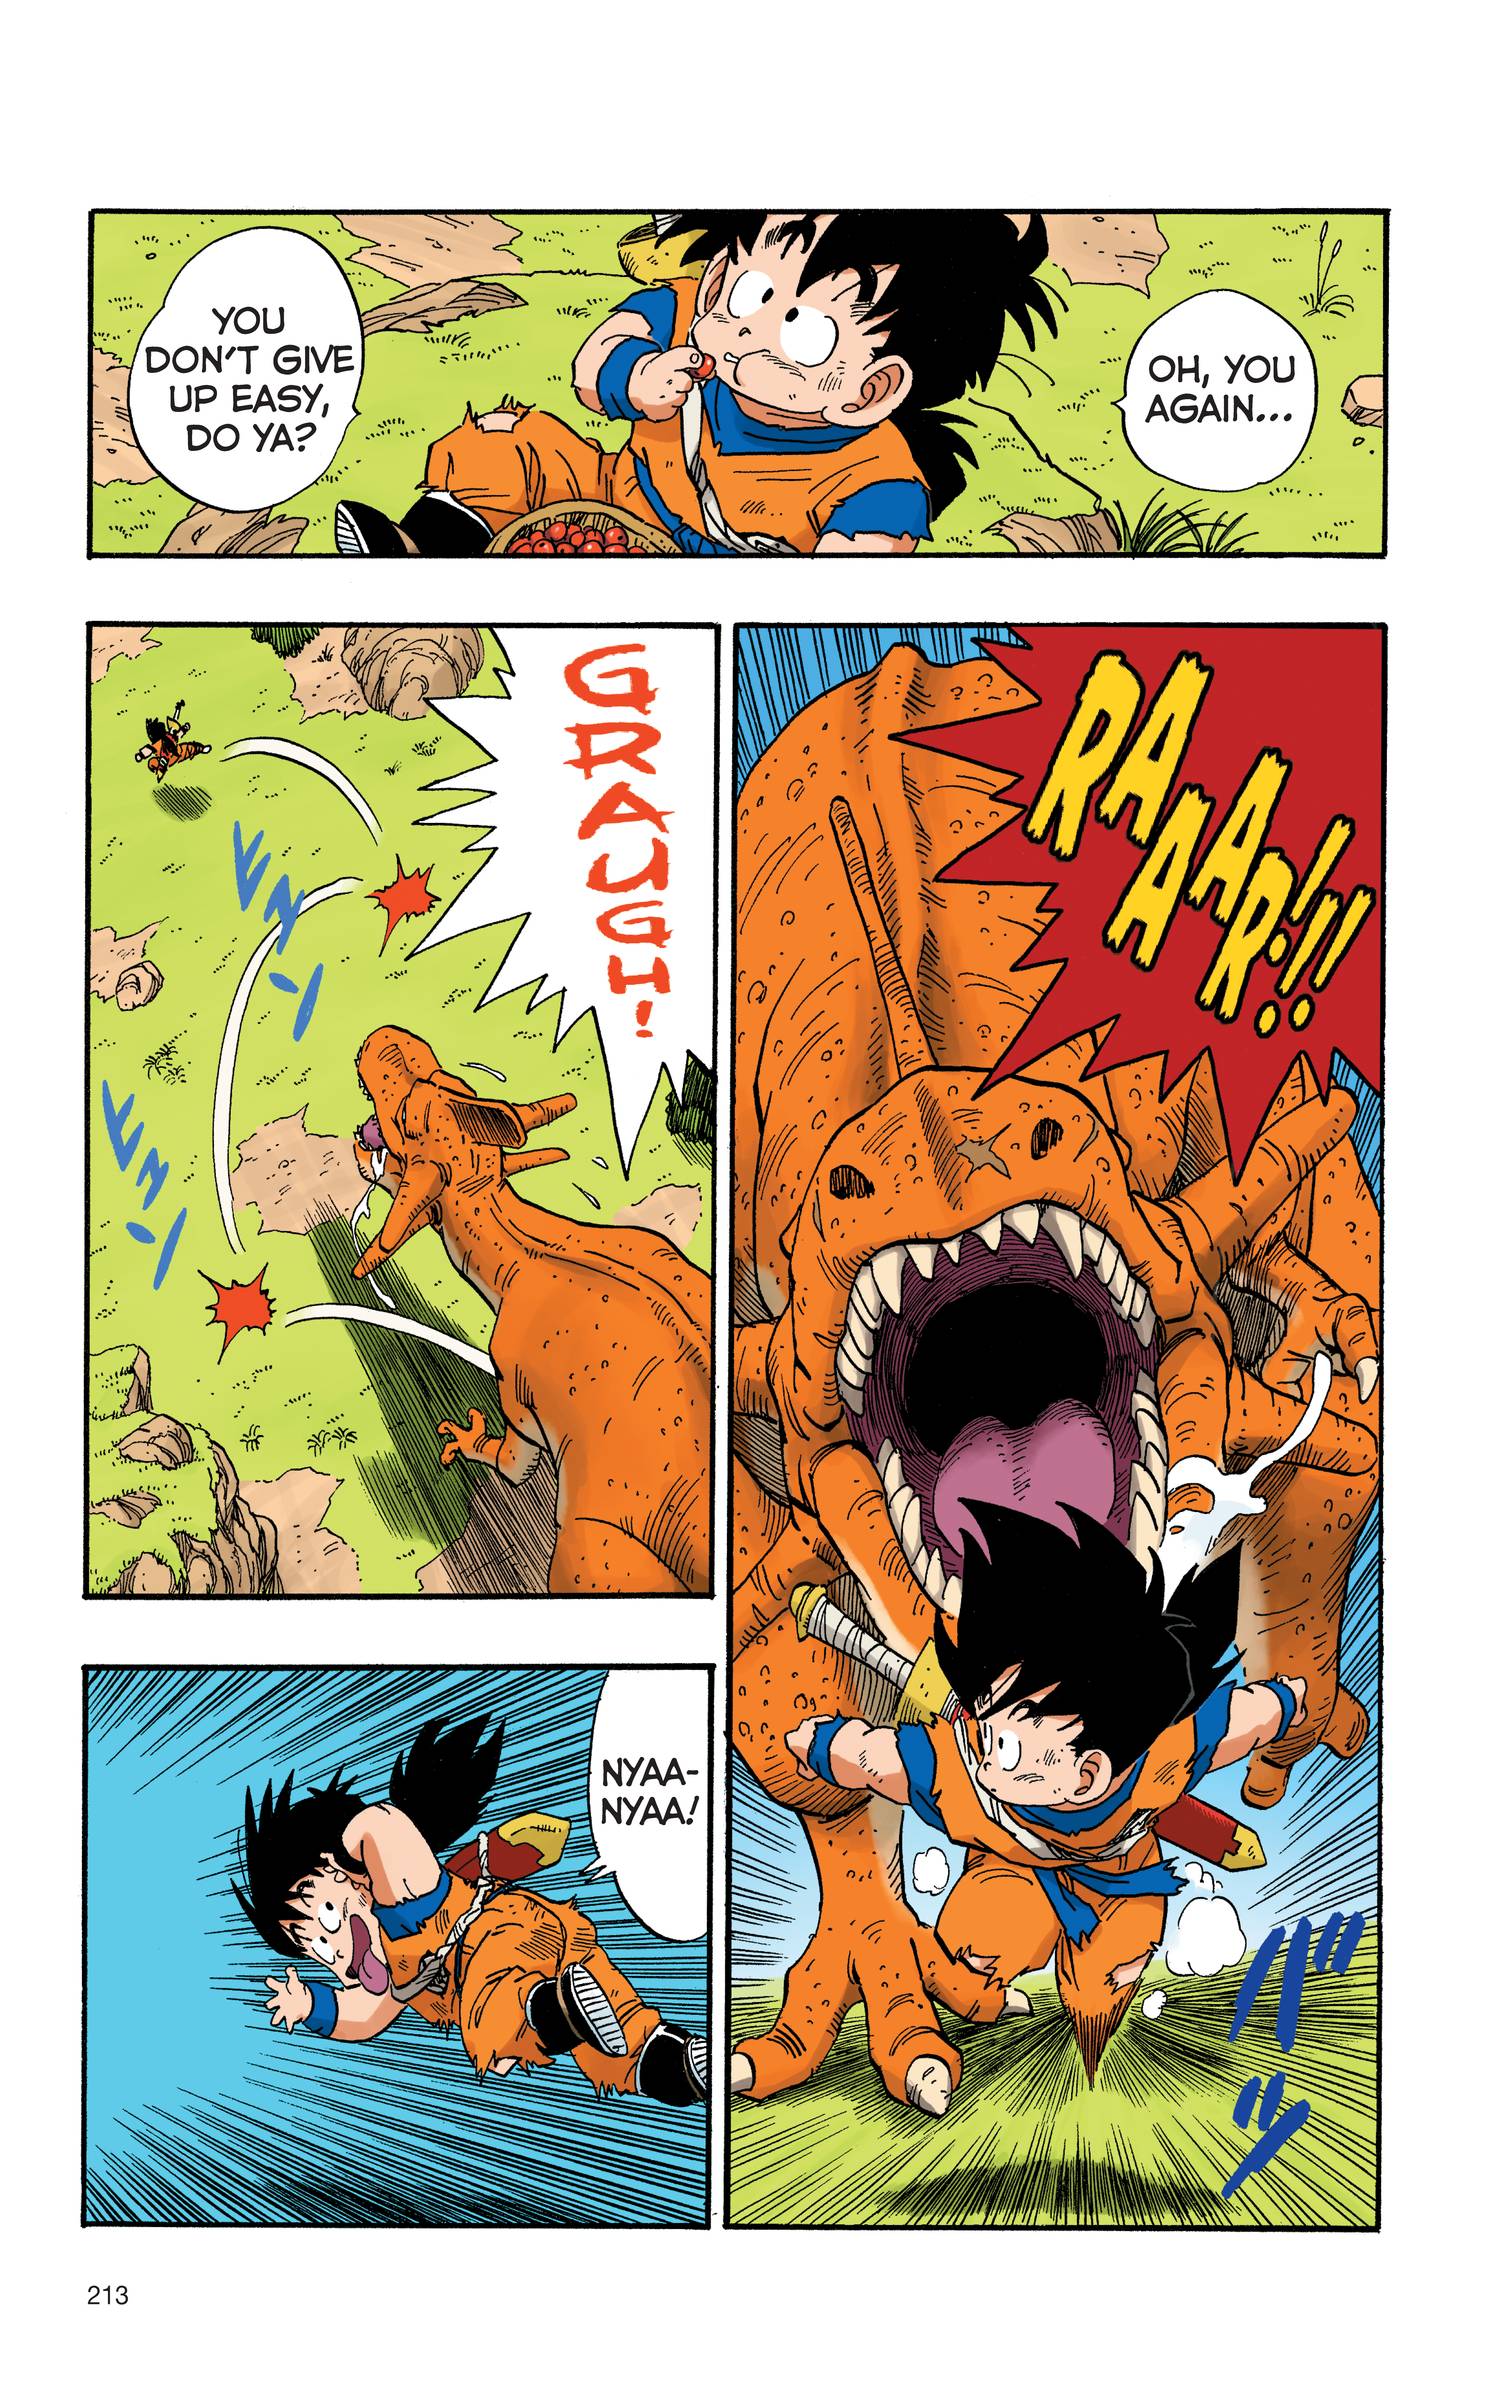 Full color Dragon Ball Super Manga